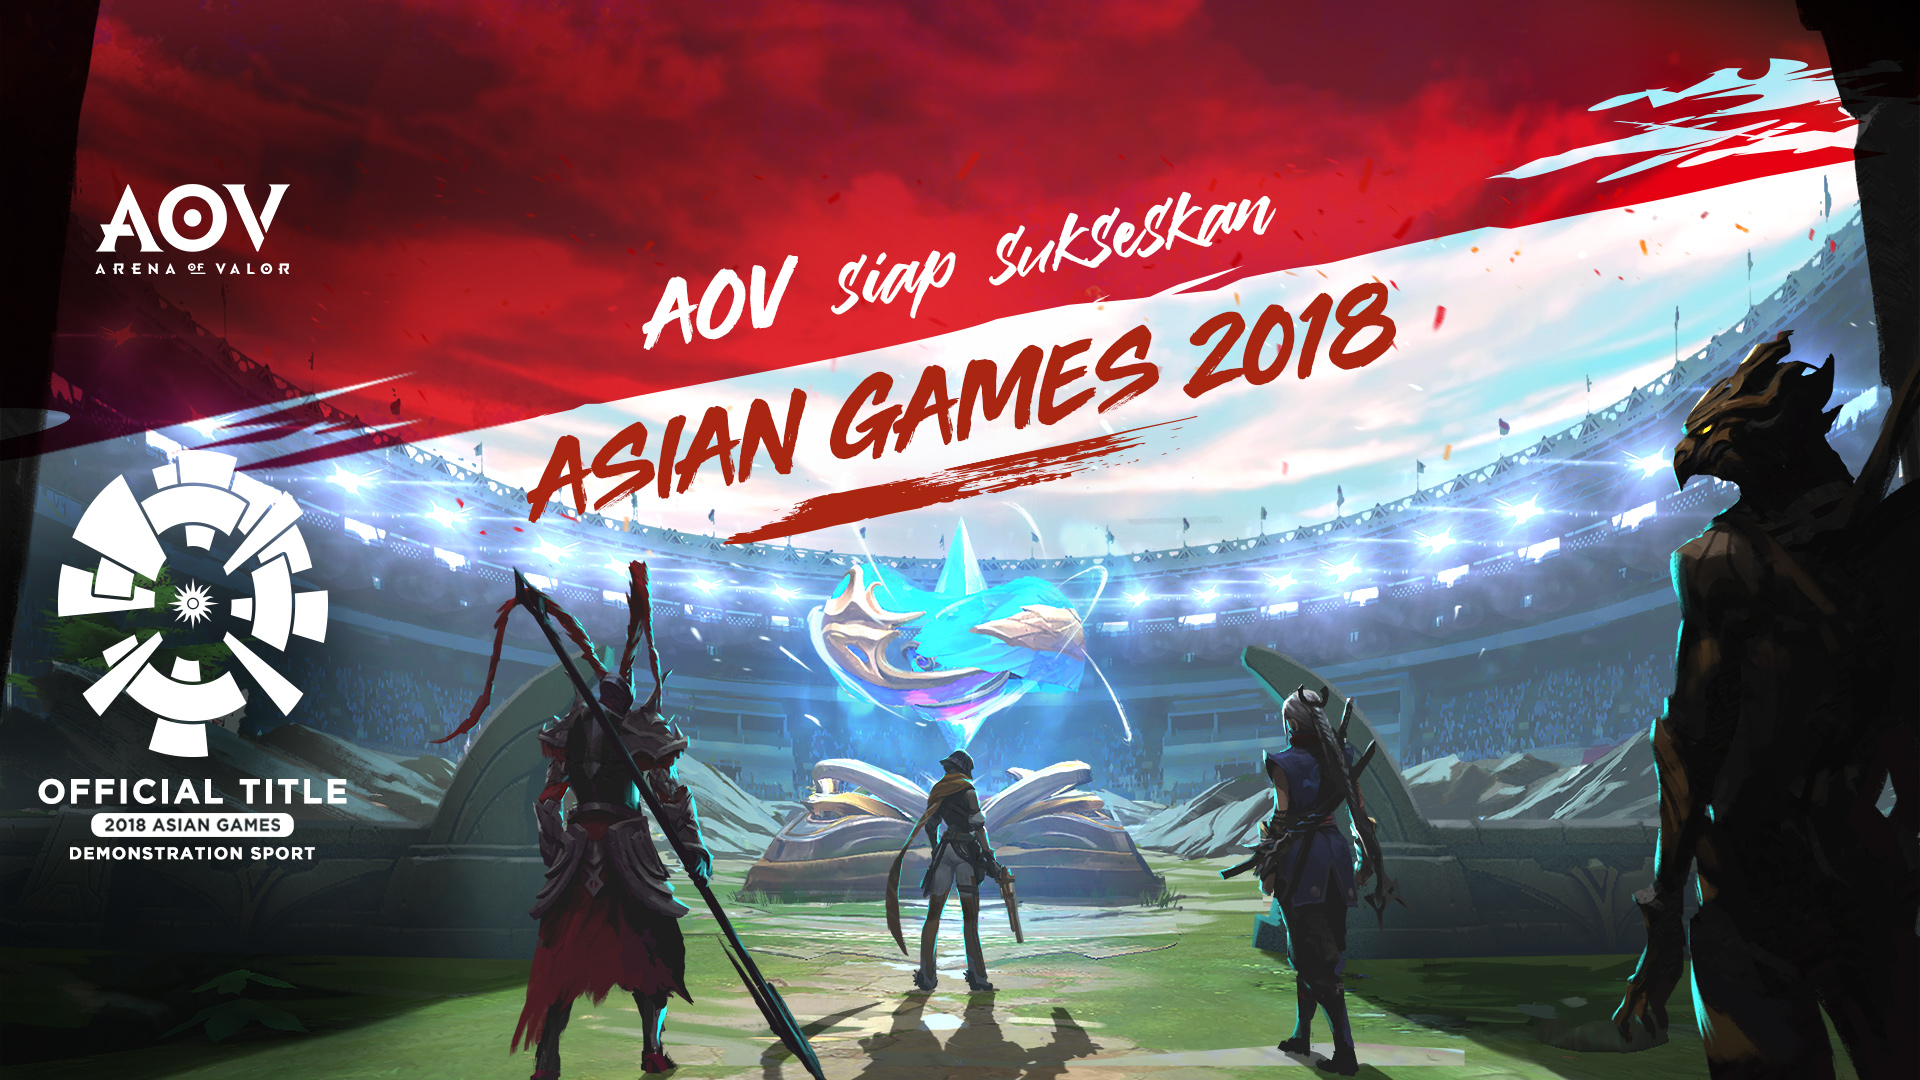 Dipertandingkan di Asian Games 2018, ini 4 keistimewaan AOV